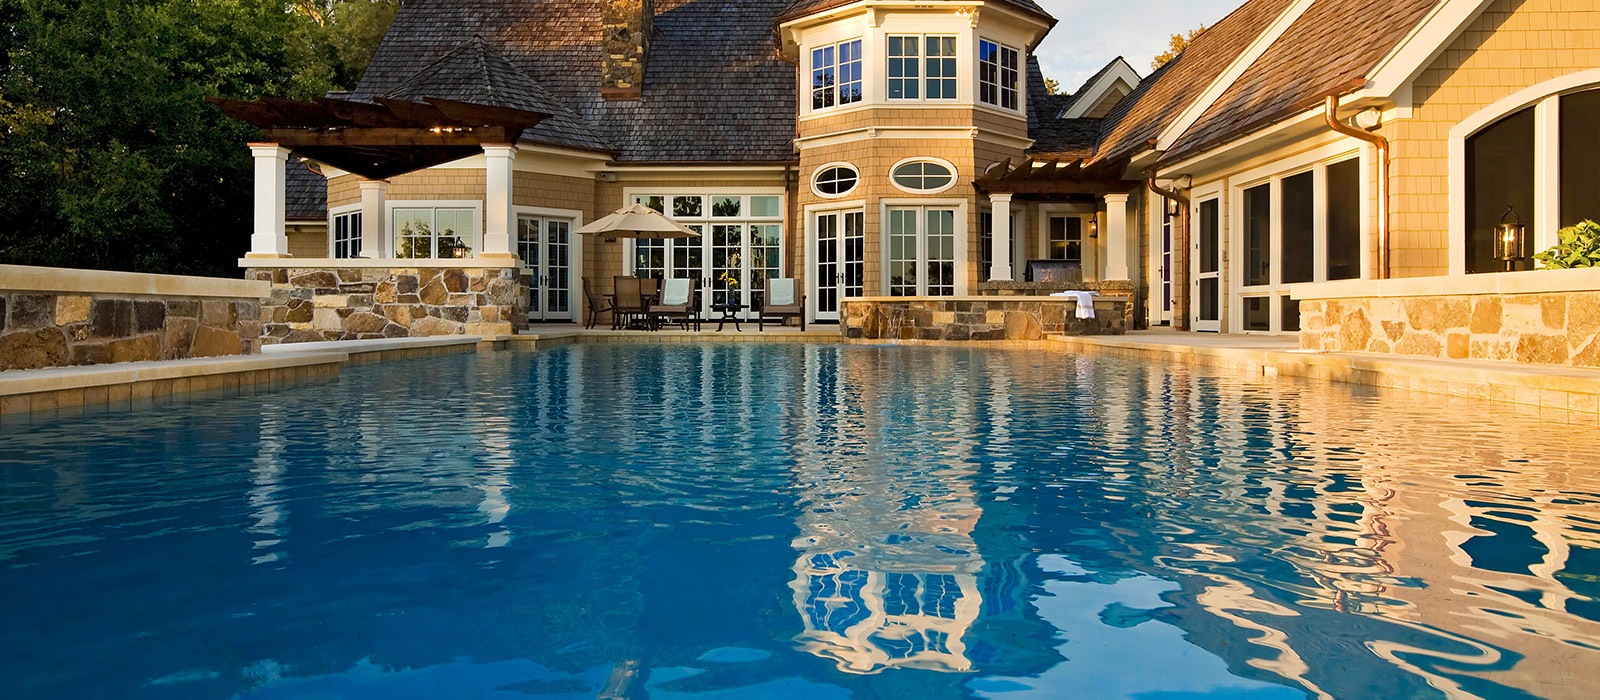 Luxury Backyard Swimming Pool